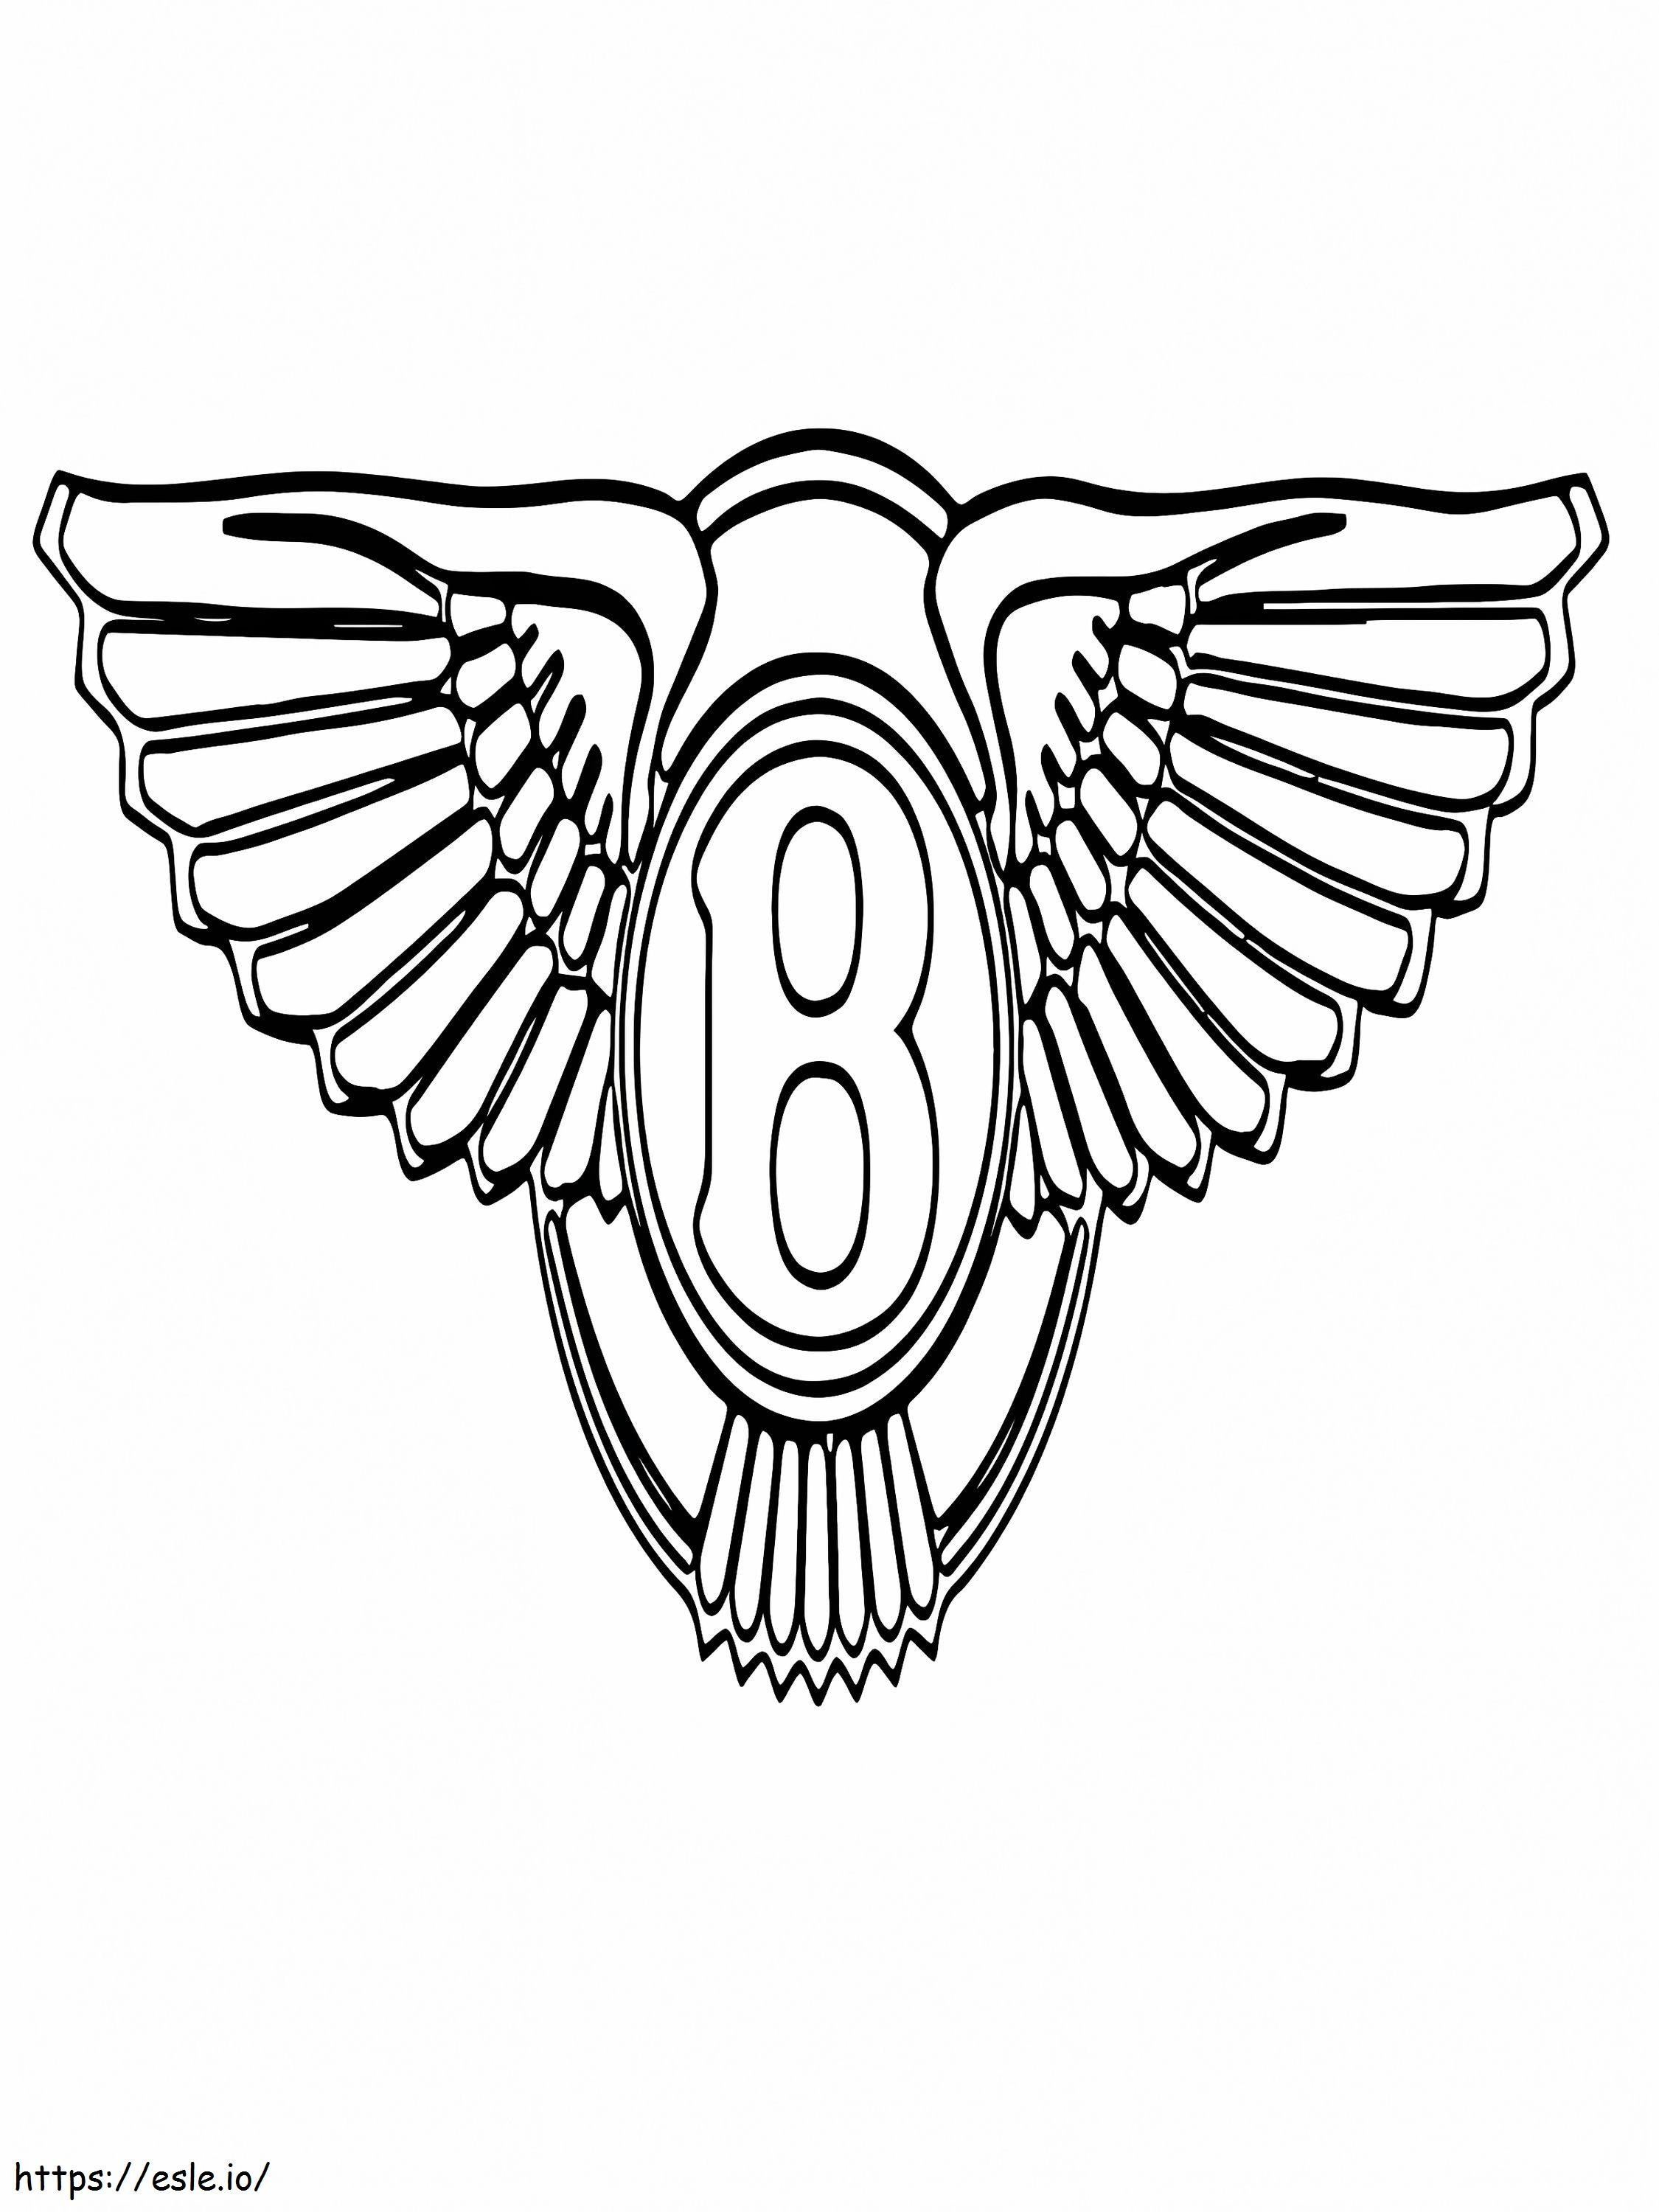 Logo Mobil Bentley Gambar Mewarnai